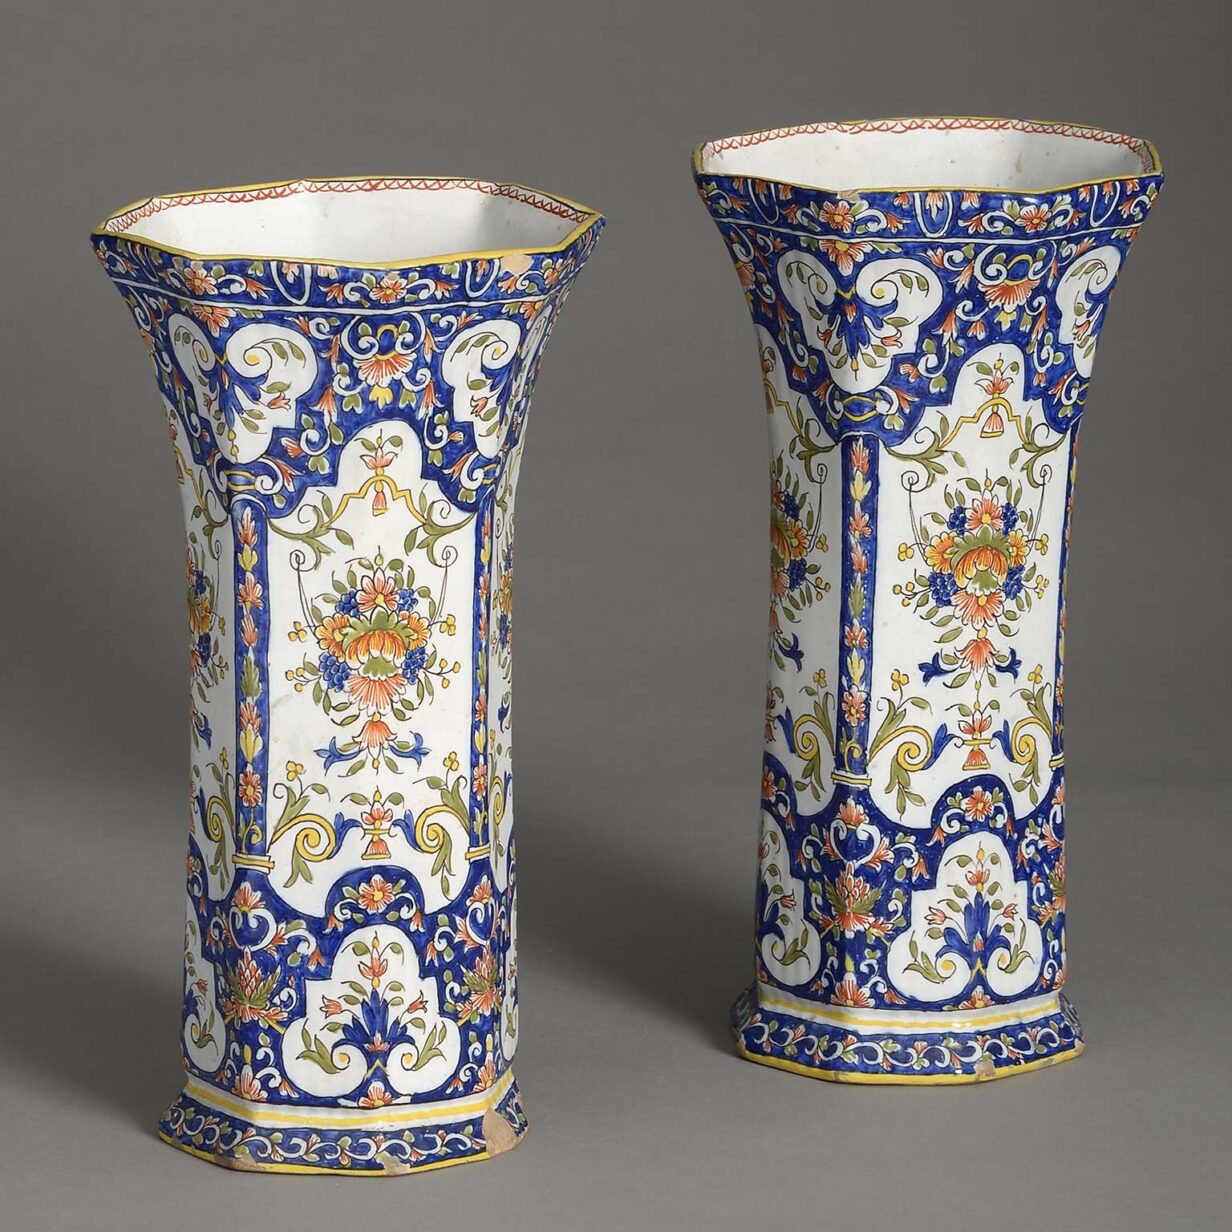 Pair of faience vases